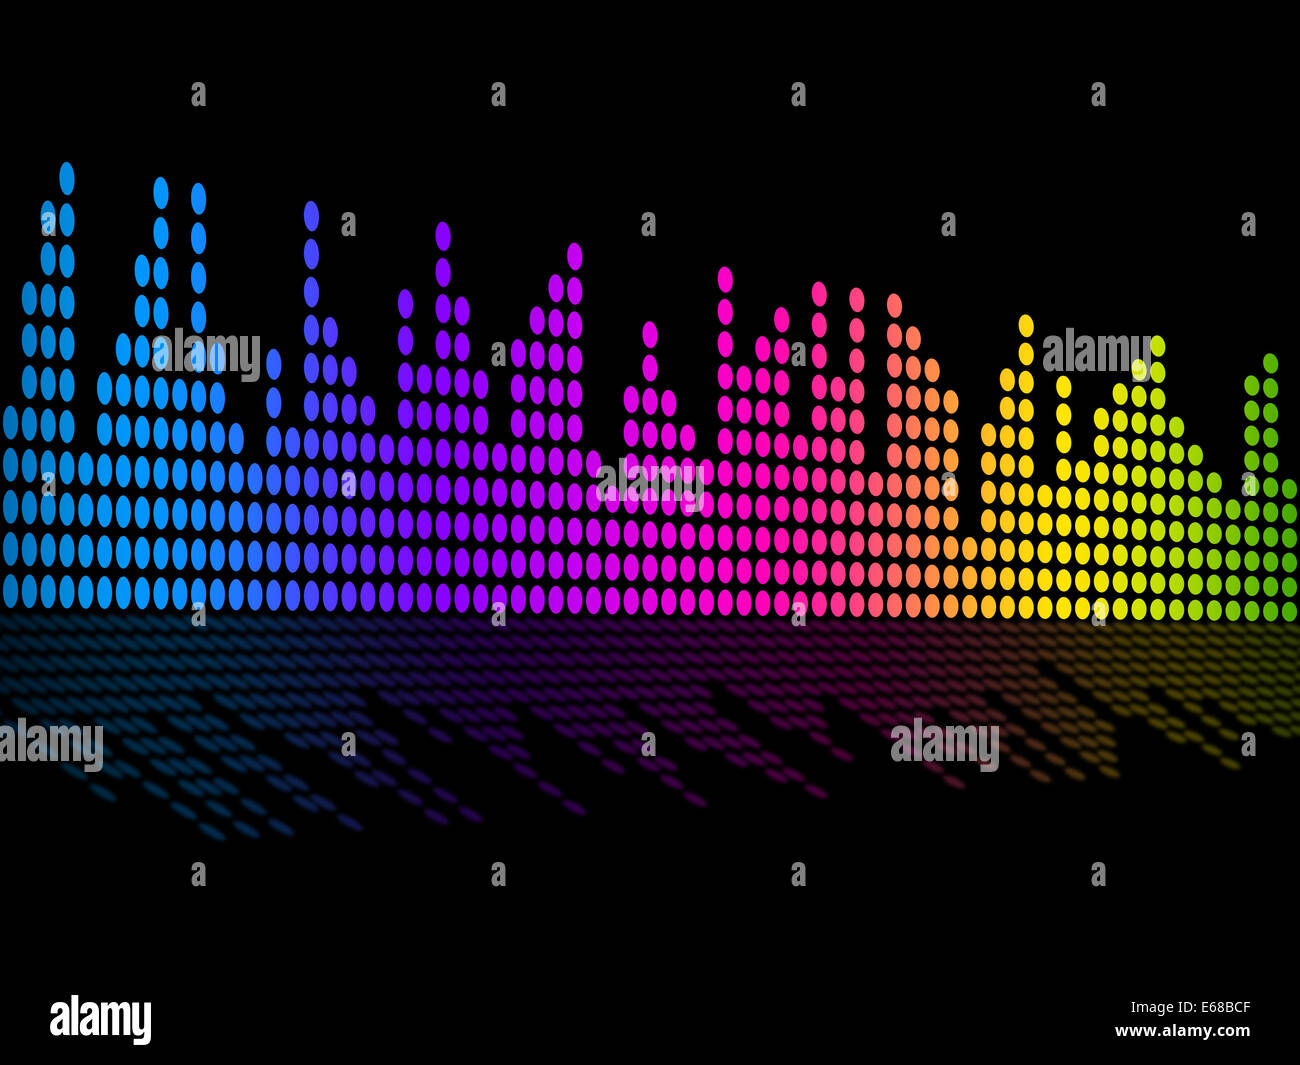 digital-music-beats-background-showing-music-soundtrack-or-sound-pulse-E68BCF.jpg